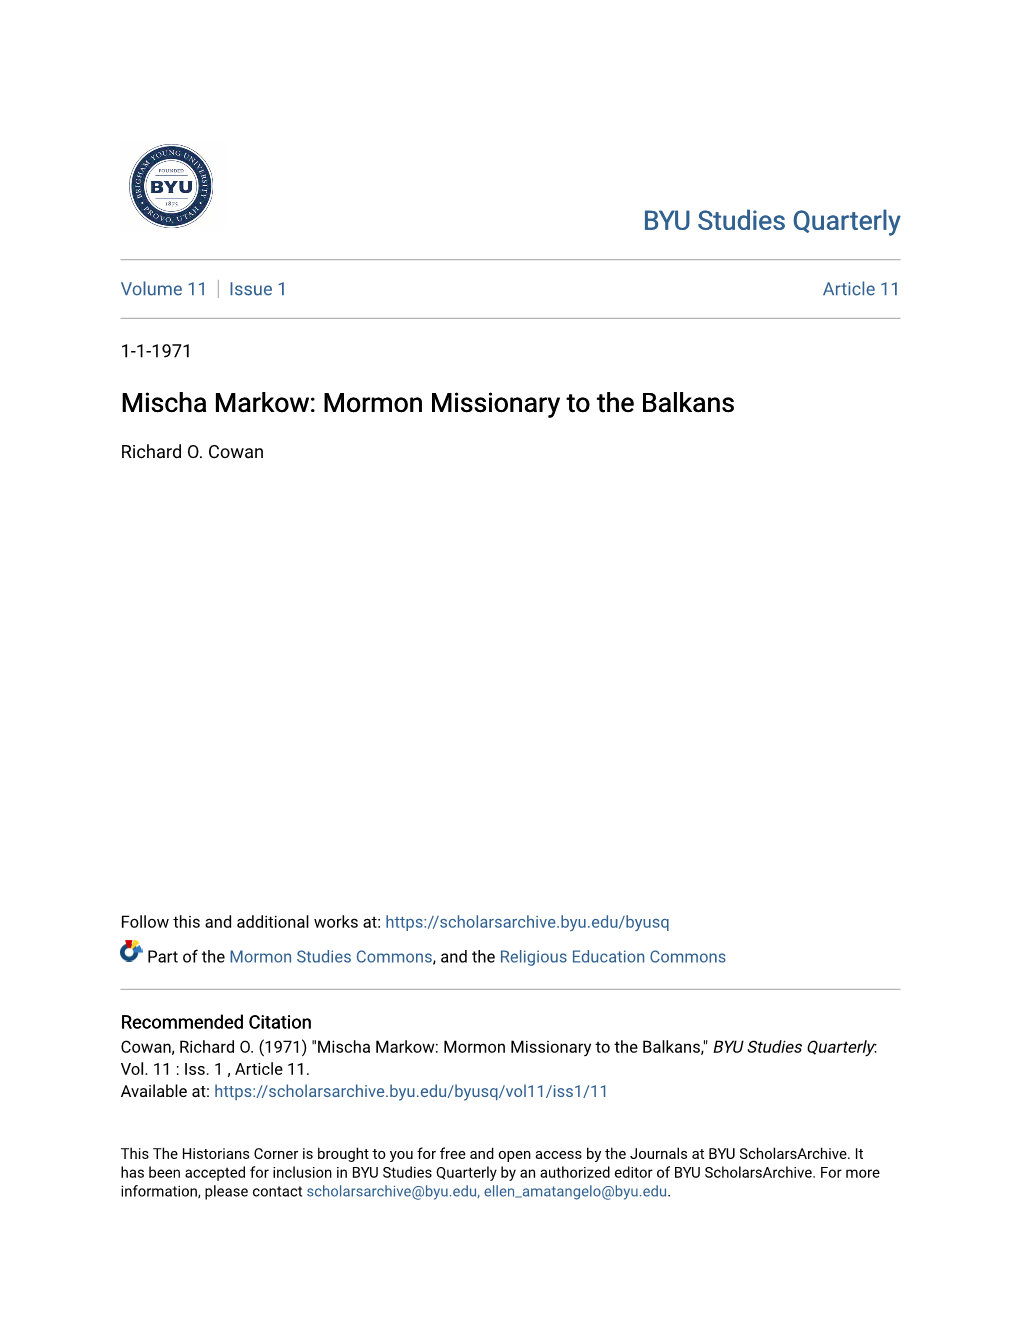 Mischa Markow: Mormon Missionary to the Balkans